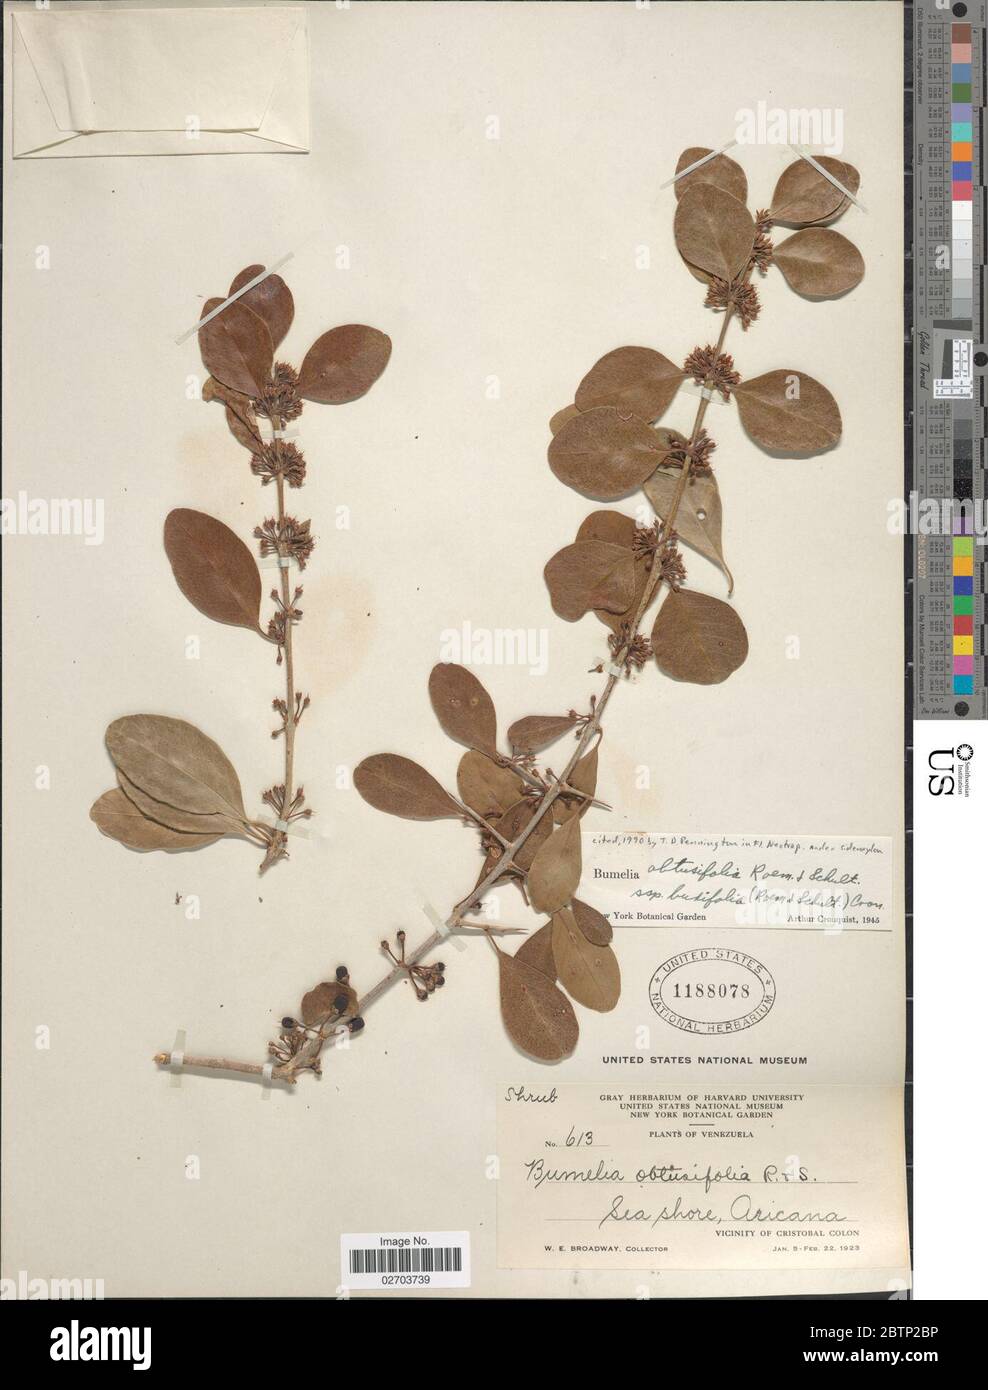 Sideroxylon obtusifolium subsp buxifolium Roem Schult TD Penn. Stock Photo